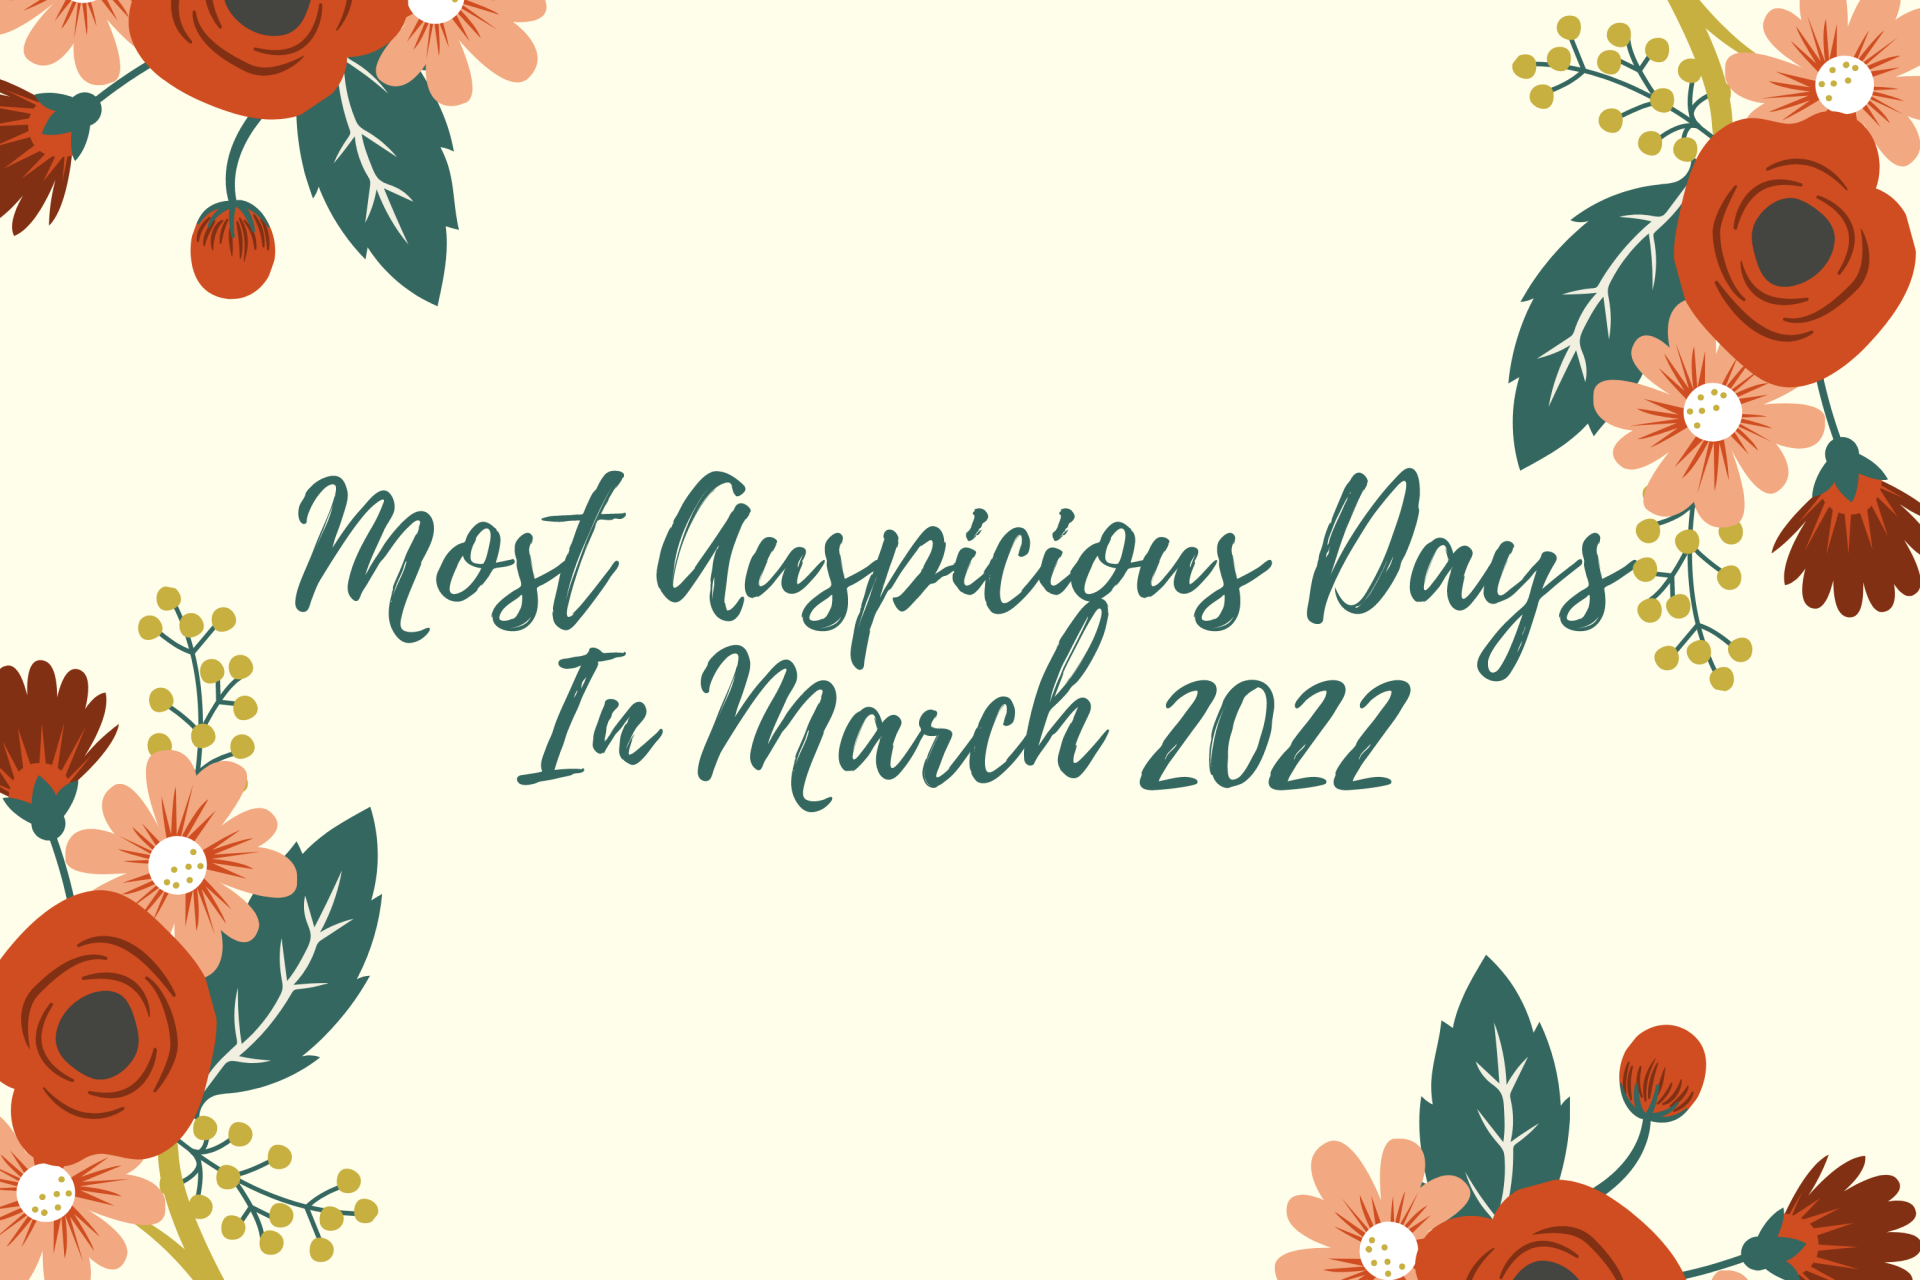 Most Auspicious Days In March 2022